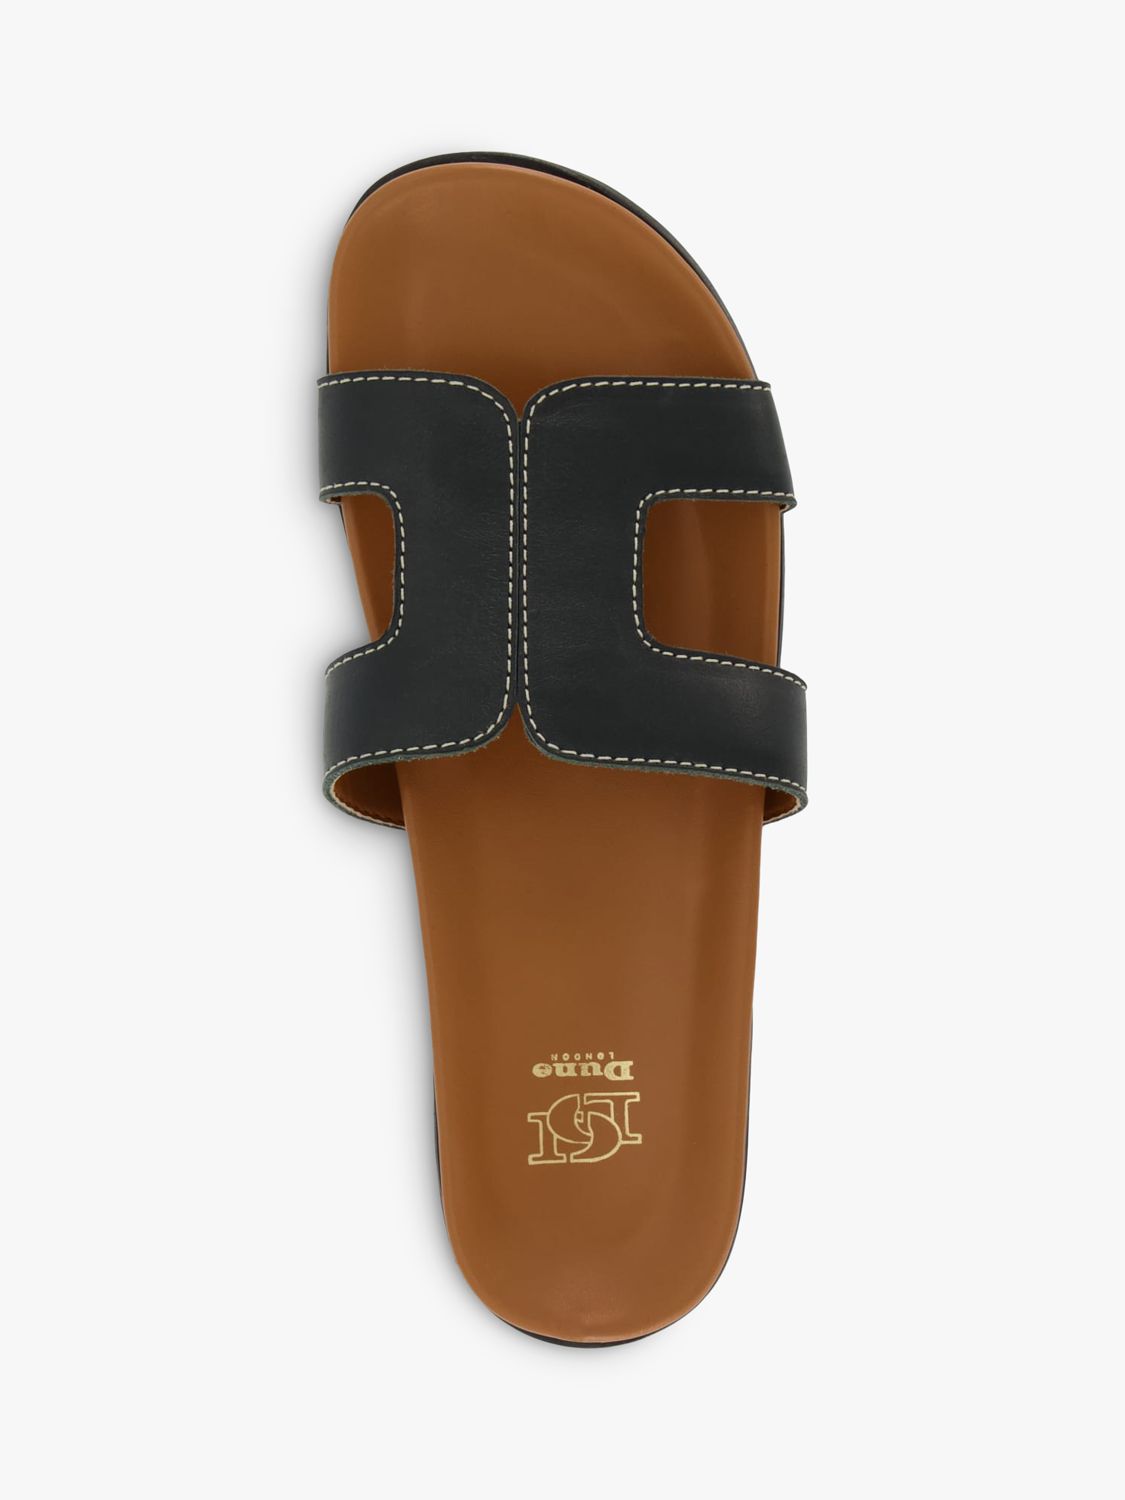 Dune Loupa Topstitch Detail Flat Slider Sandals, Black, 3